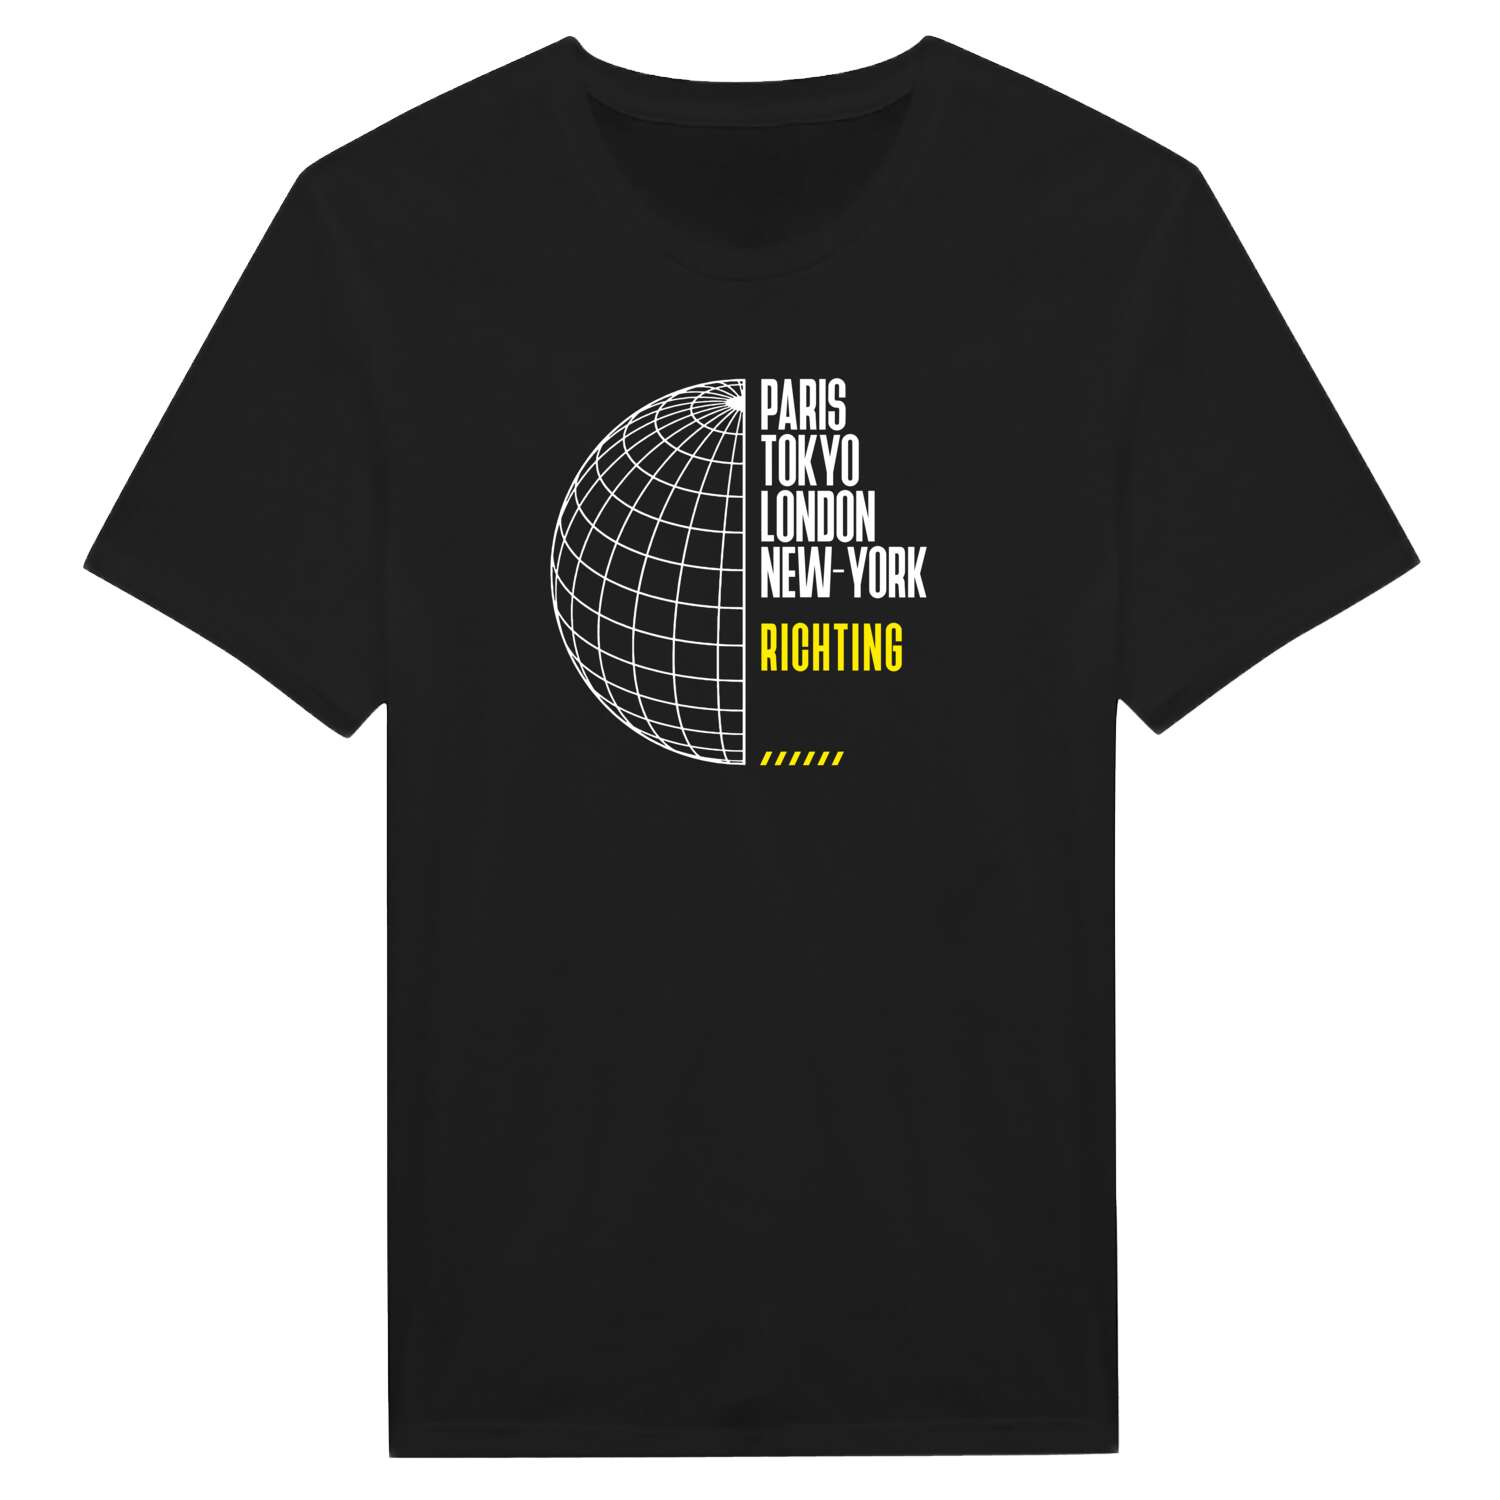 Richting T-Shirt »Paris Tokyo London«